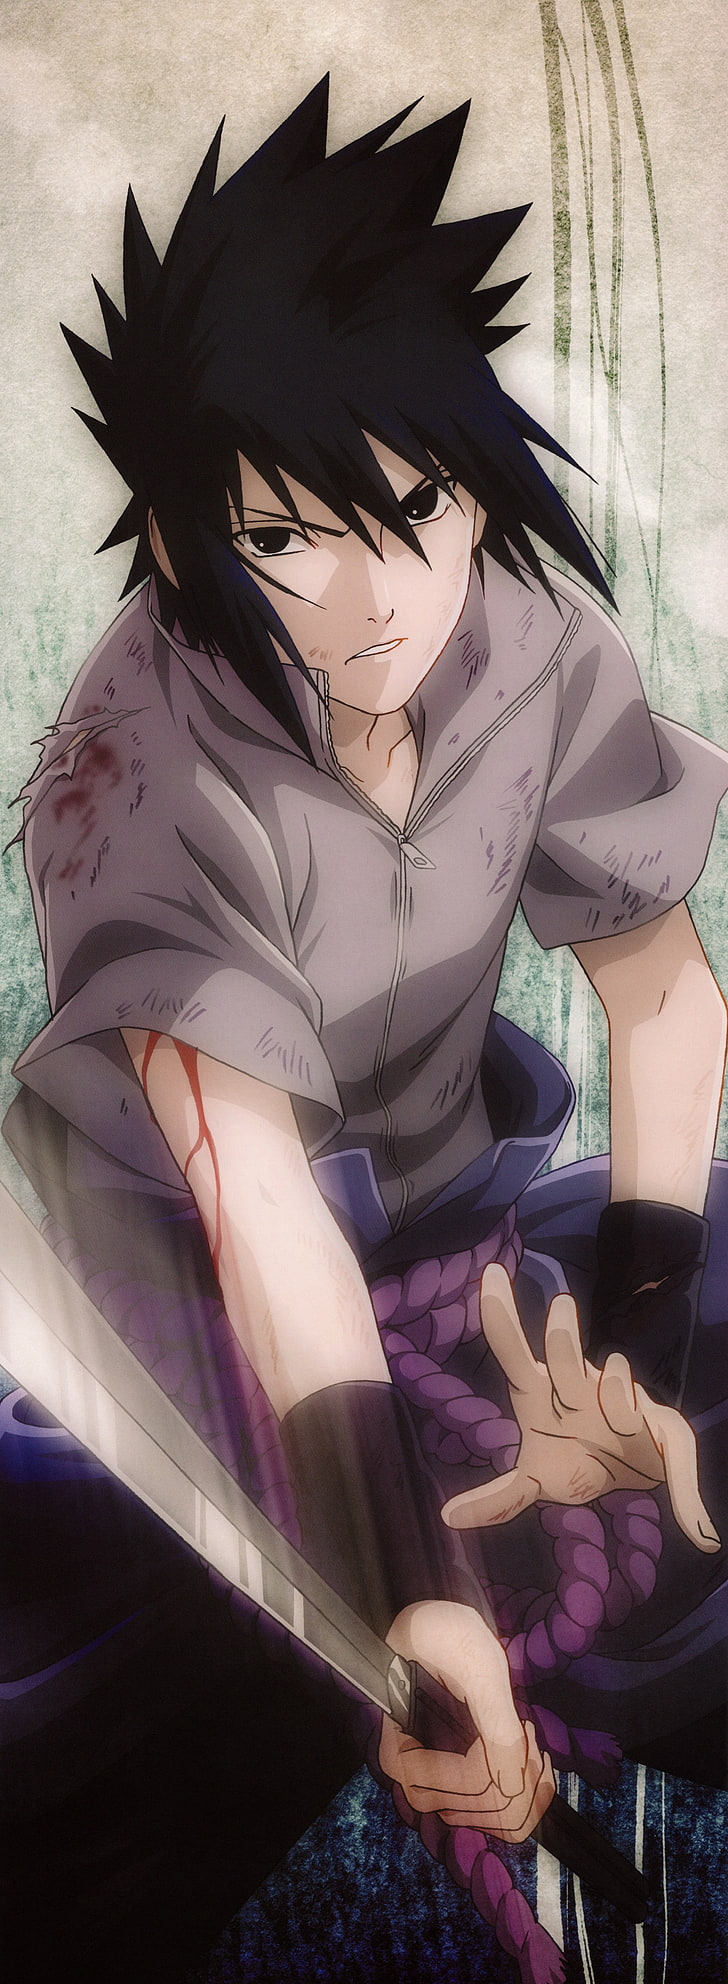 Sasuke Uchiha Lightning Blade from Naruto Shippuden for Desktop HD wallpaper  download